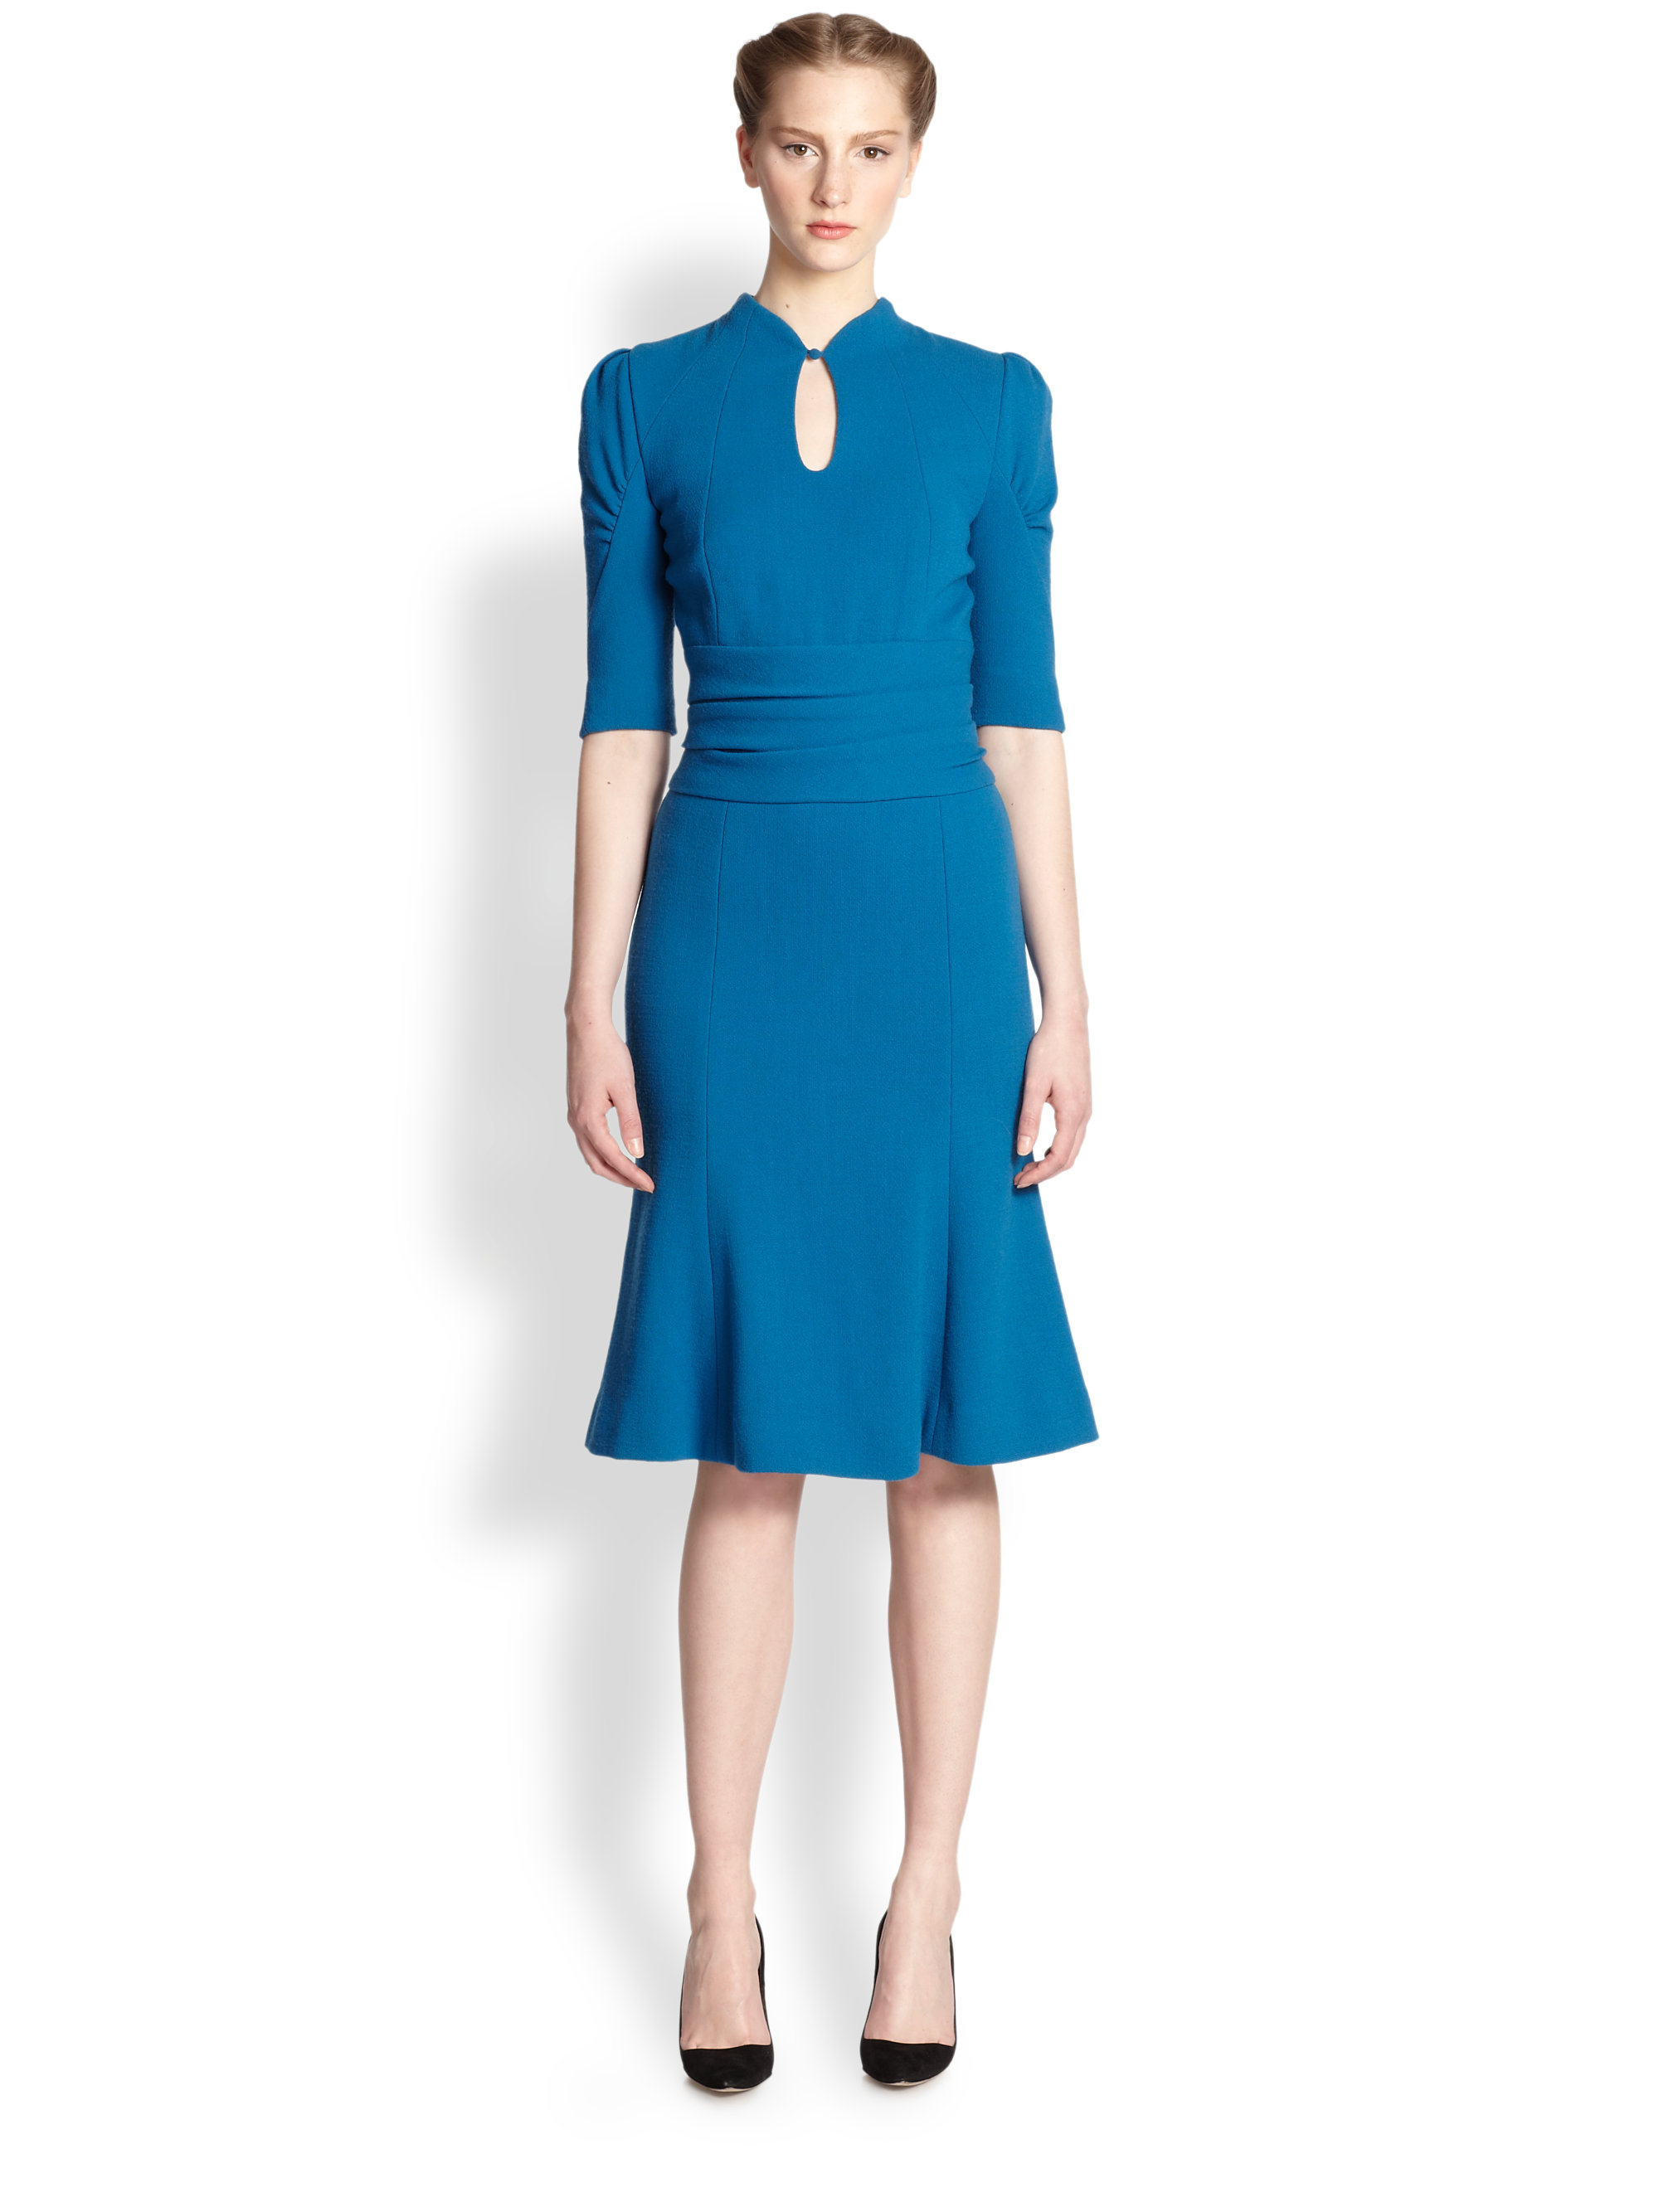 Lyst - Carolina Herrera Wool Crepe Keyhole Dress in Blue